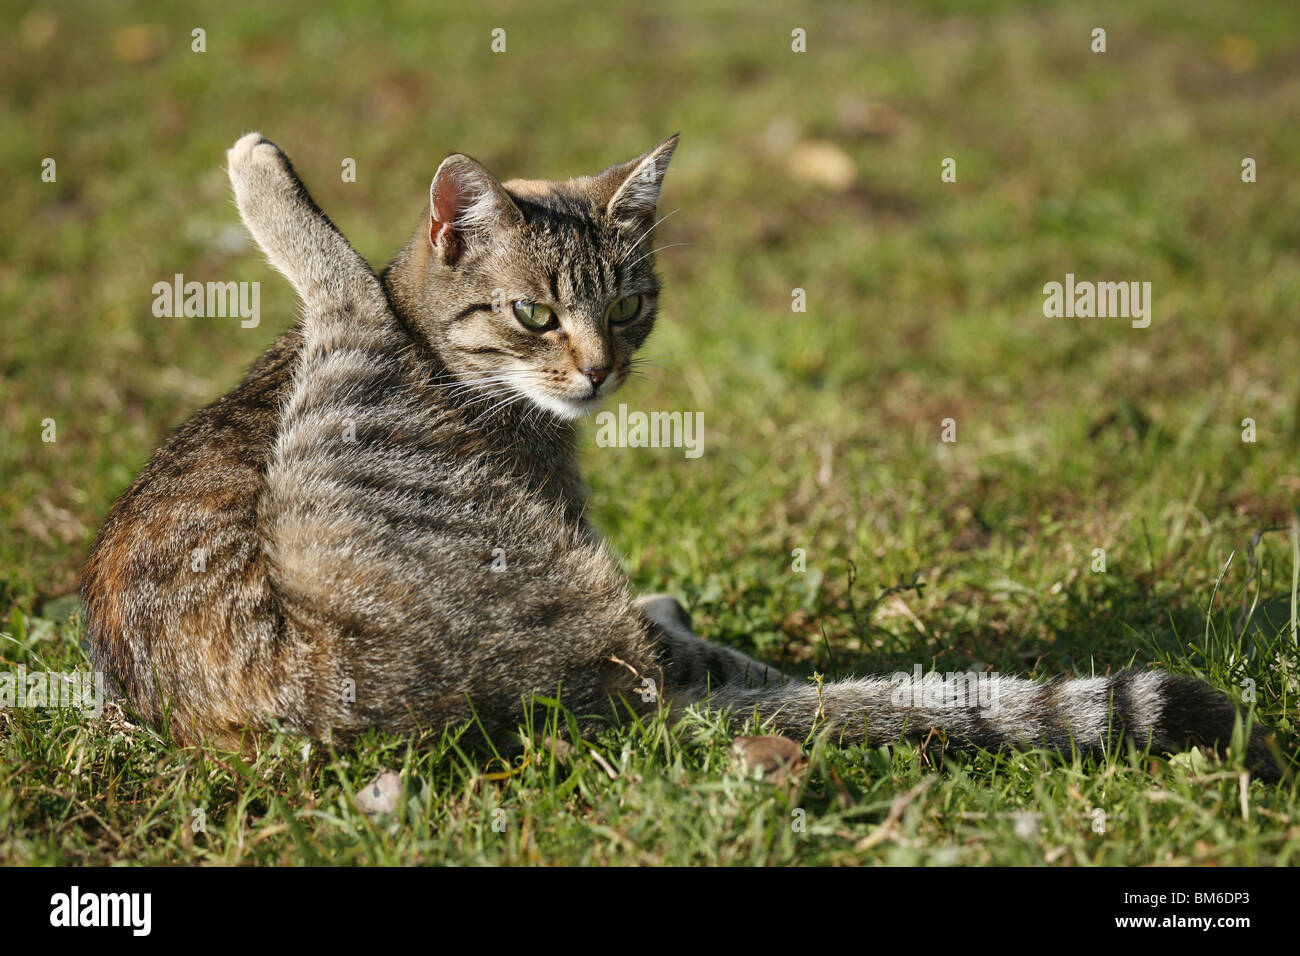 Katze putzt sich / preening cat Stock Photo - Alamy